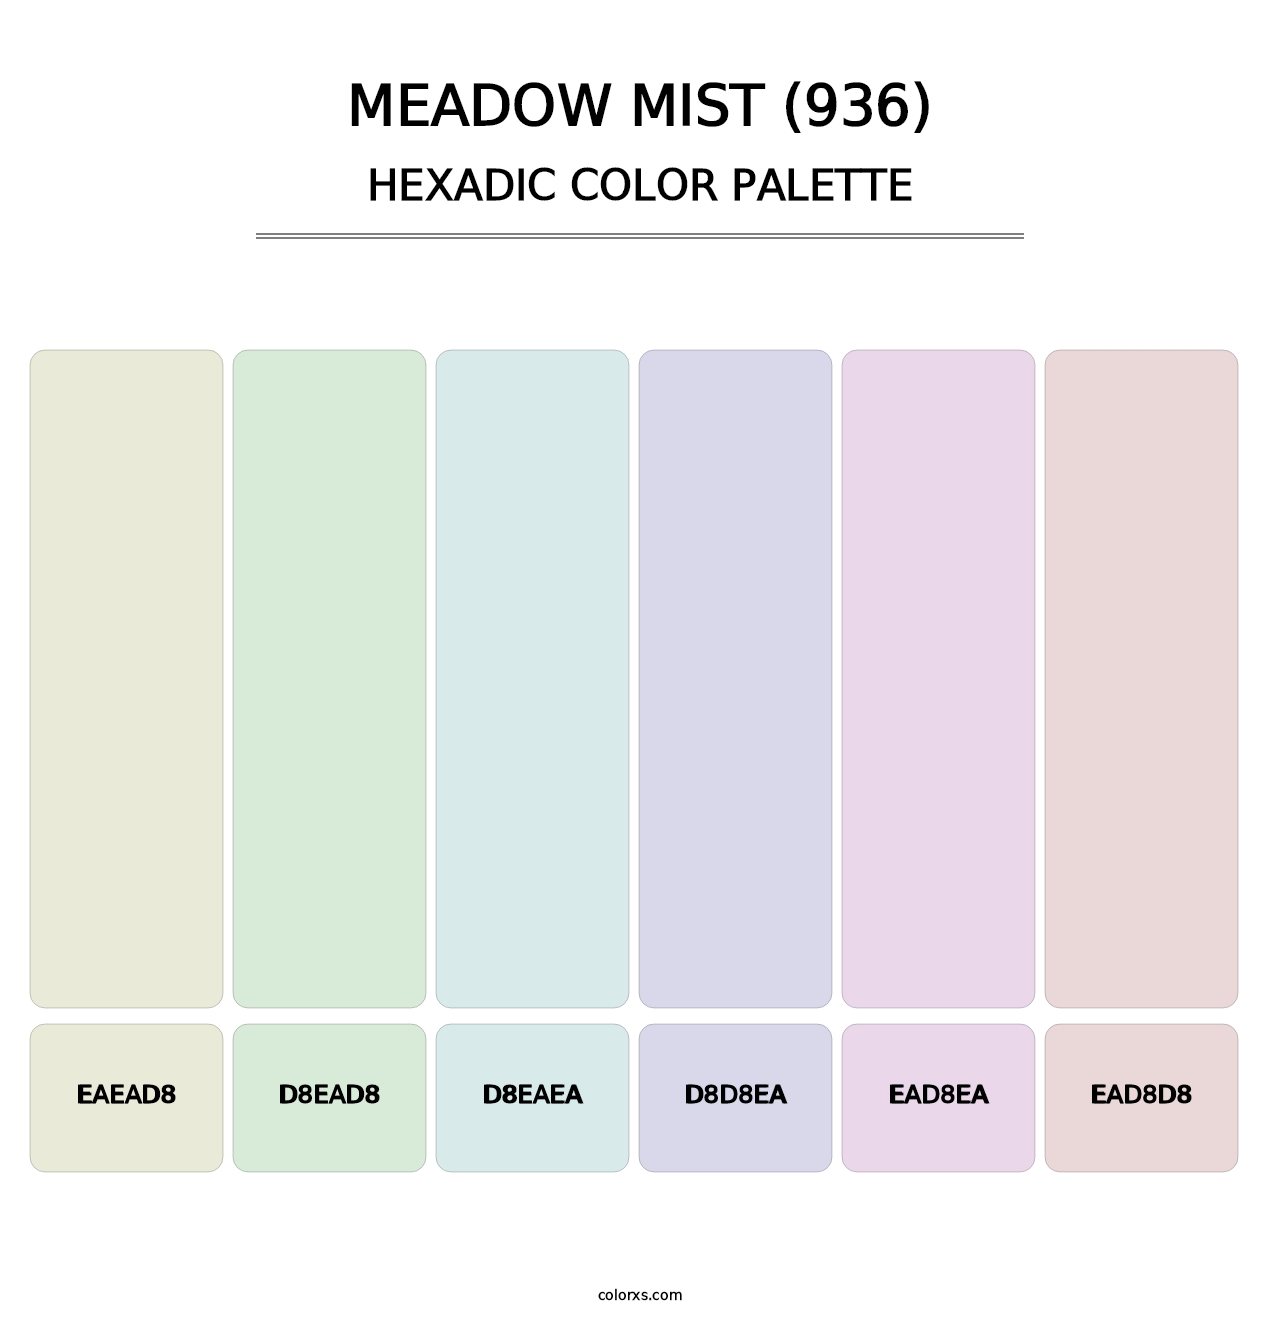 Meadow Mist (936) - Hexadic Color Palette